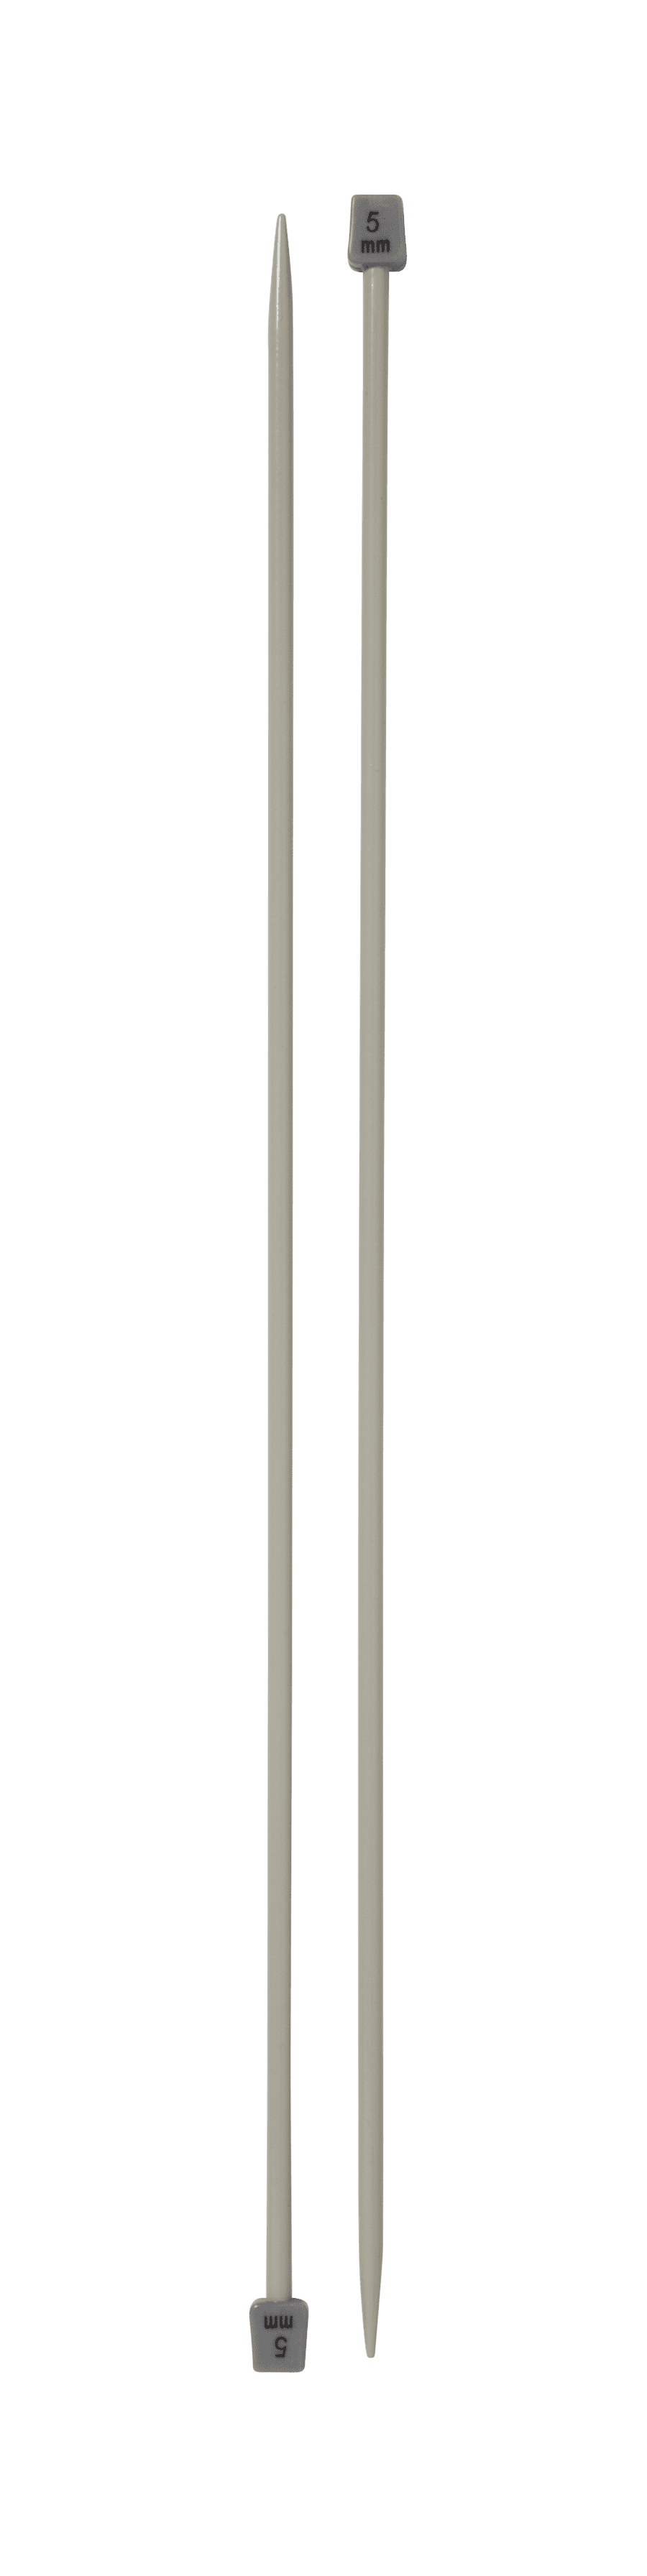 Breinaalden – 2 – 7 mm – Variatie 4 - Wibra